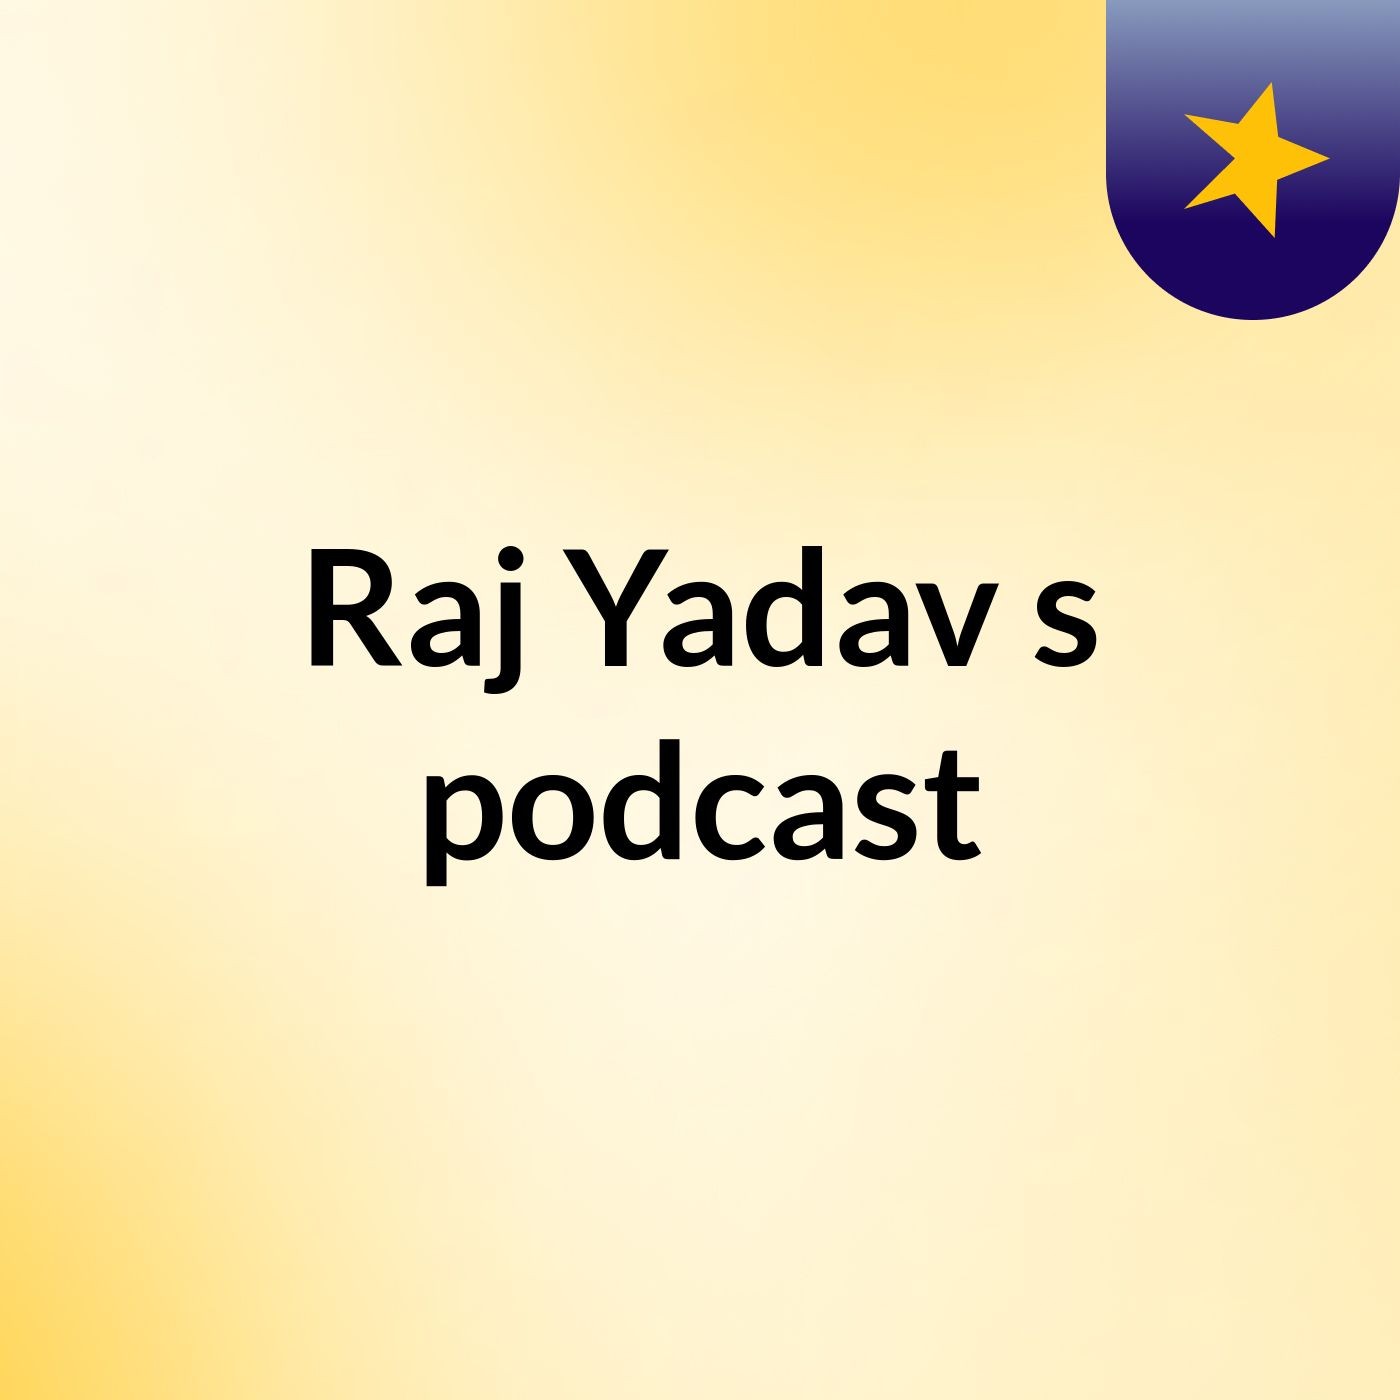 Raj Yadav's podcast